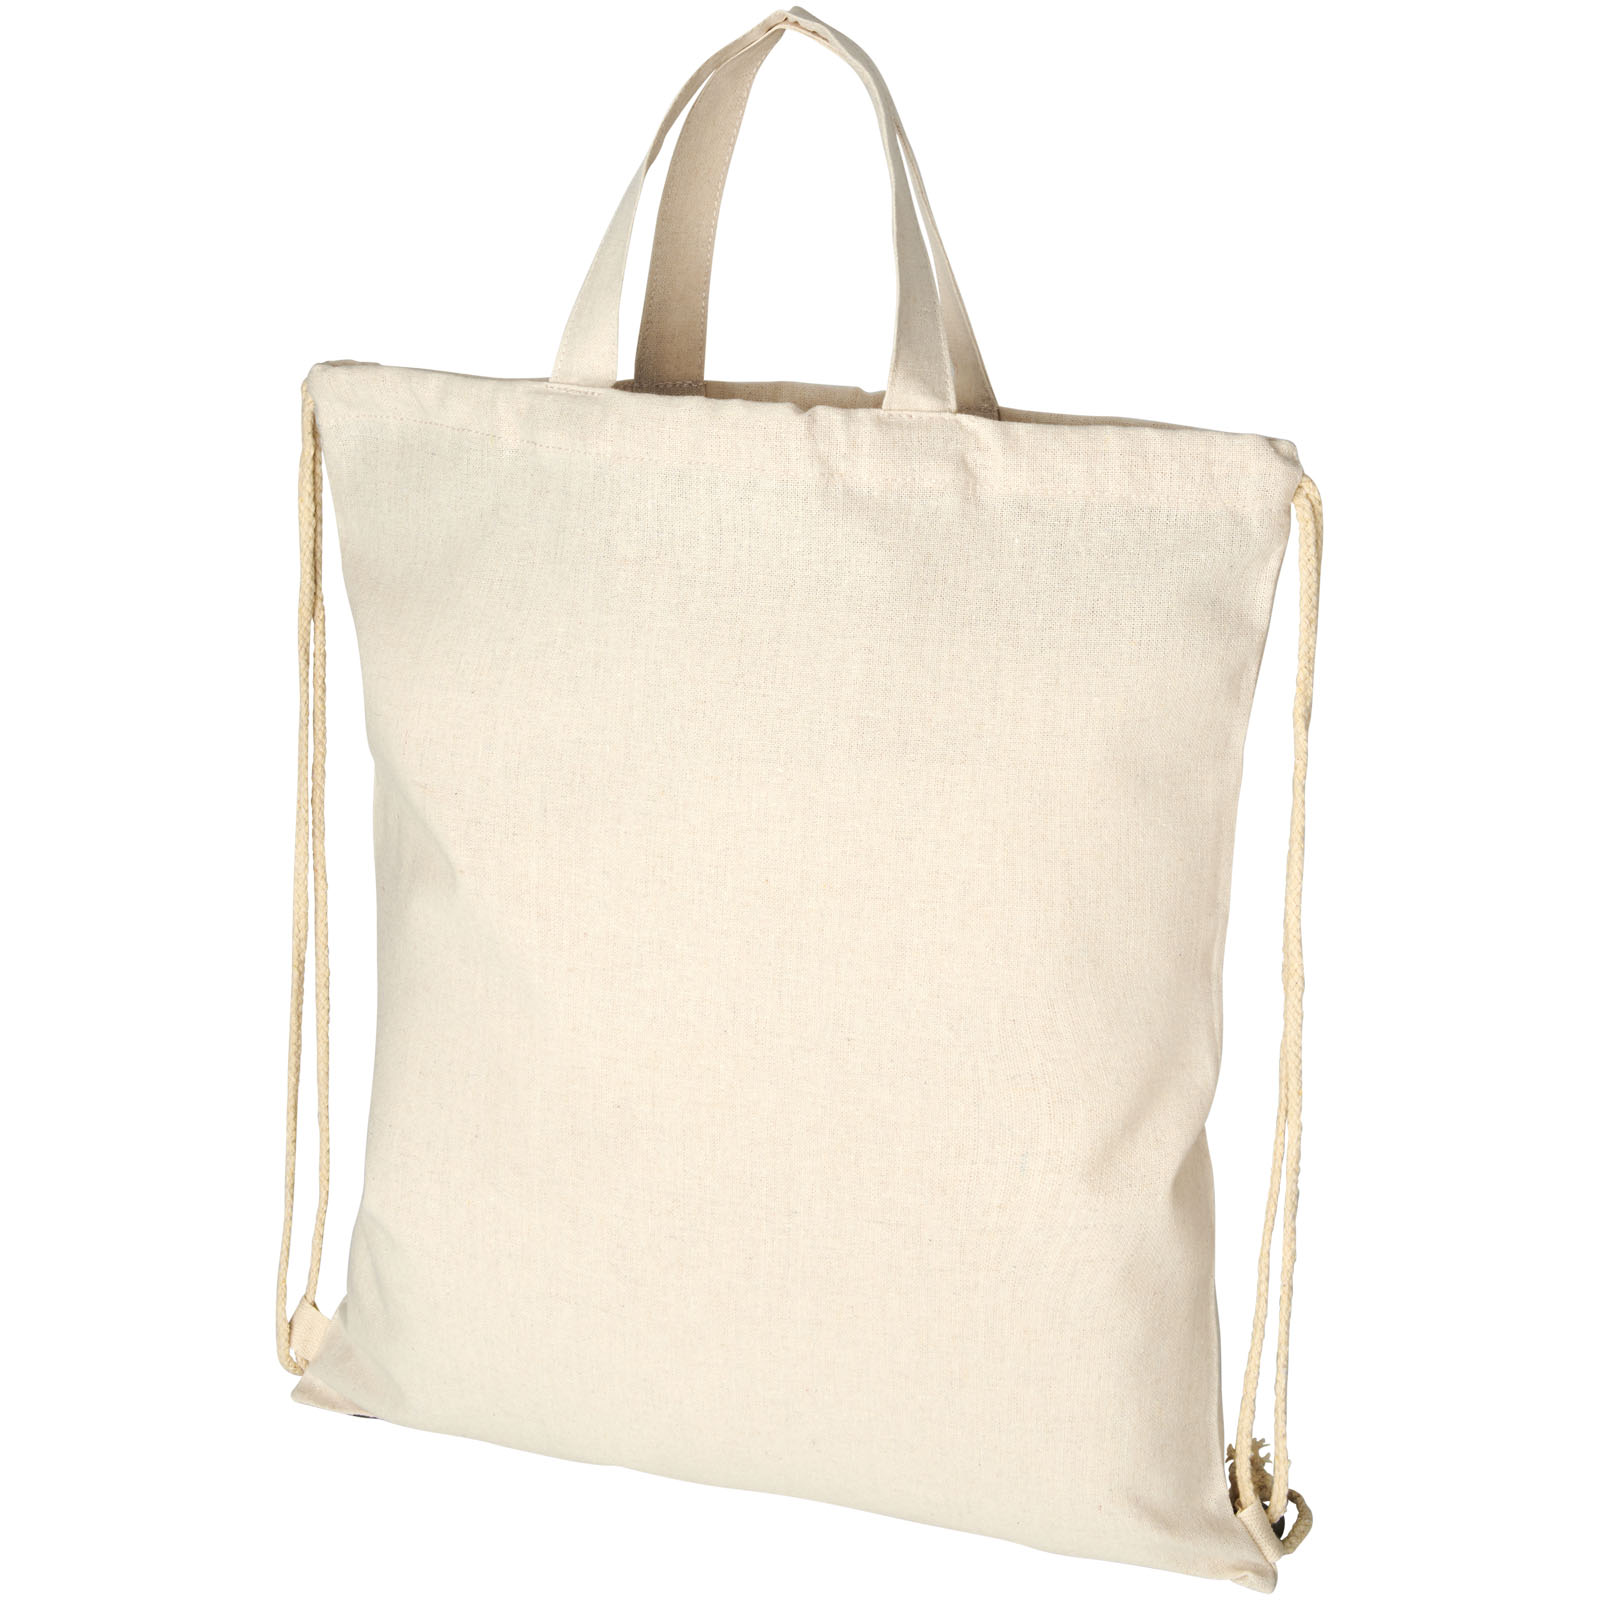 Advertising Drawstring Bags - Pheebs 210 g/m² recycled drawstring bag 6L